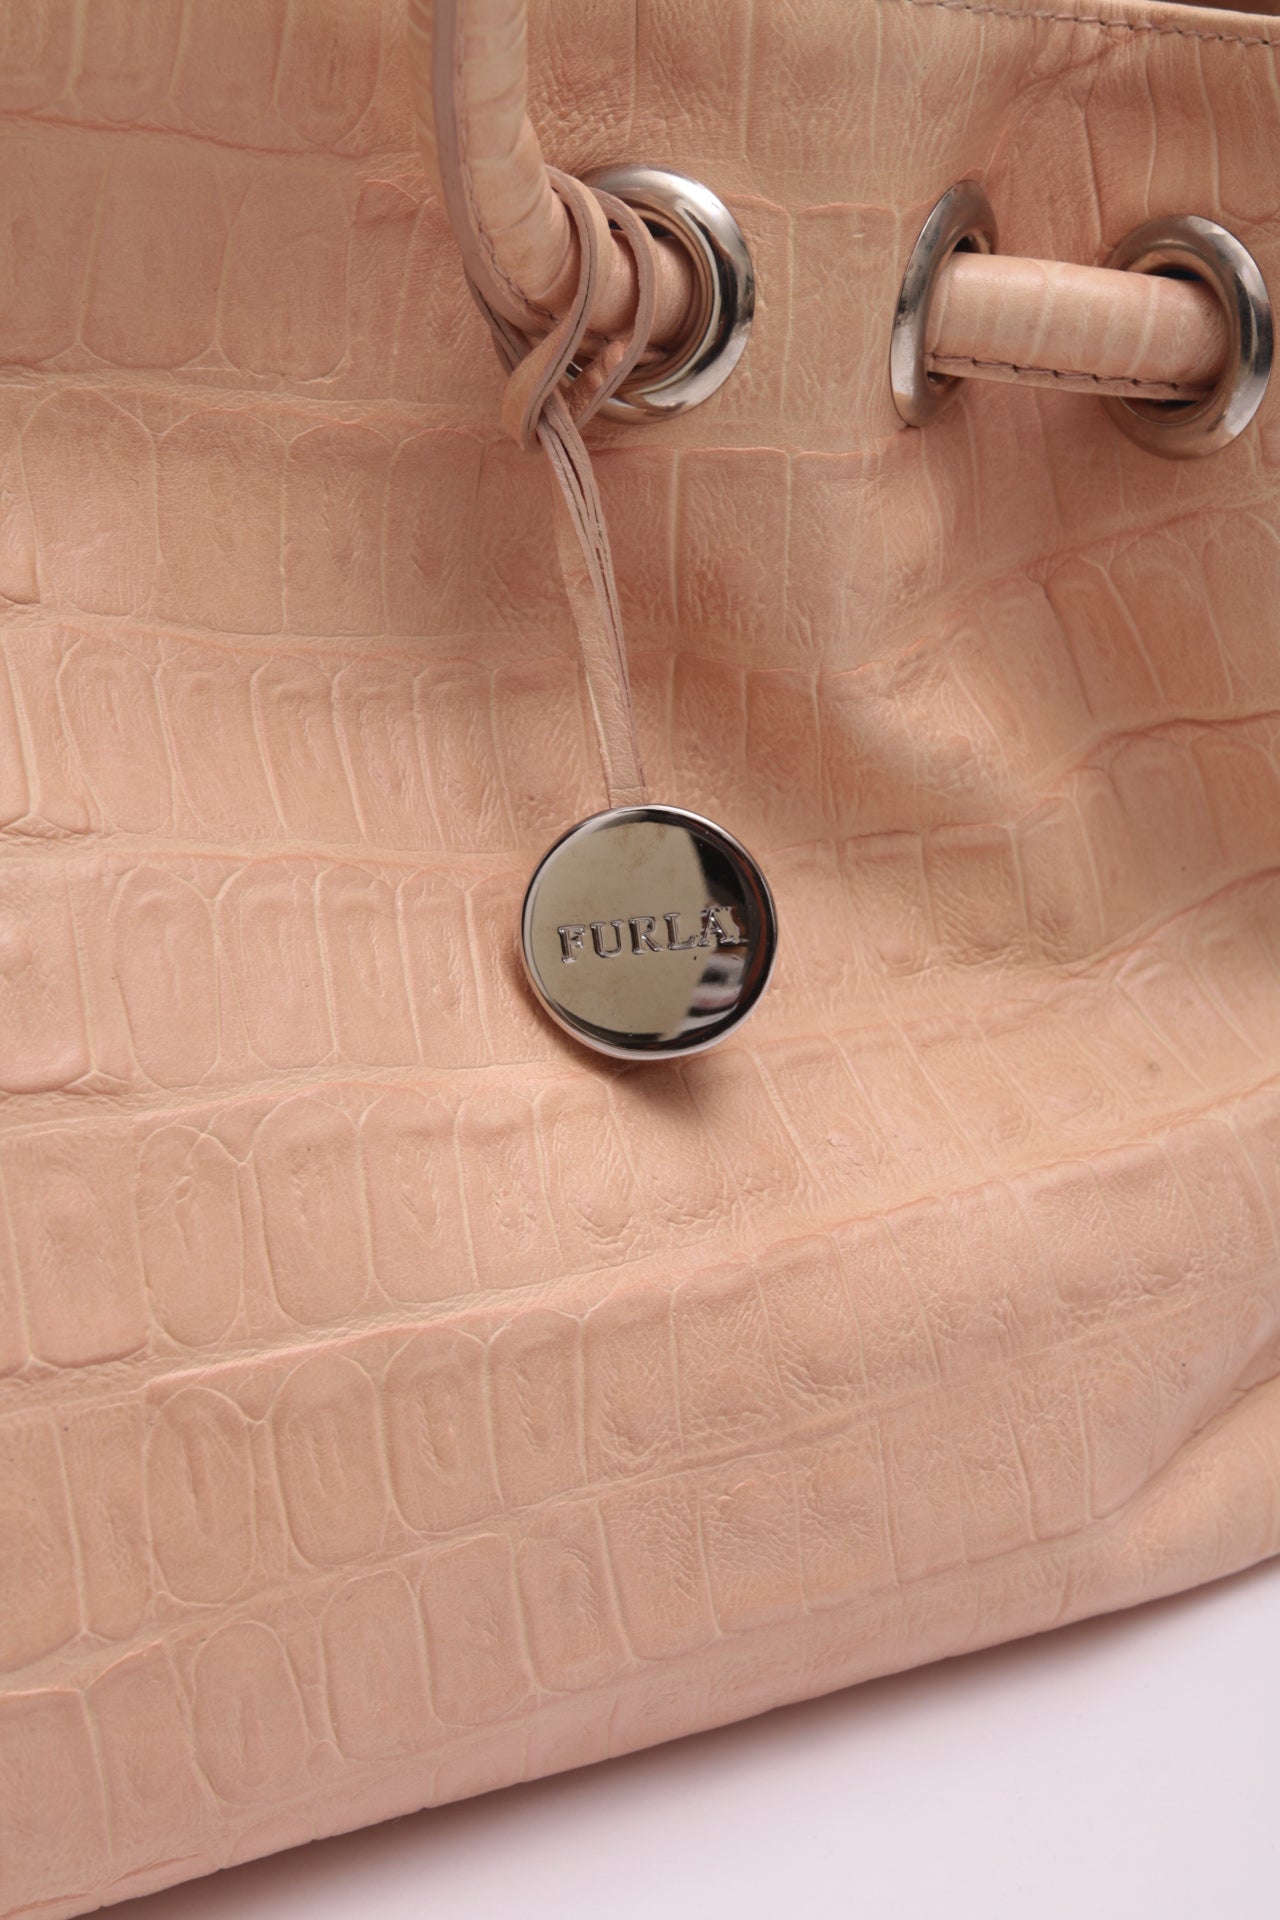 Furla 'Giselle' Leather Handbag | Furla Handbags | Bag Borrow or Steal